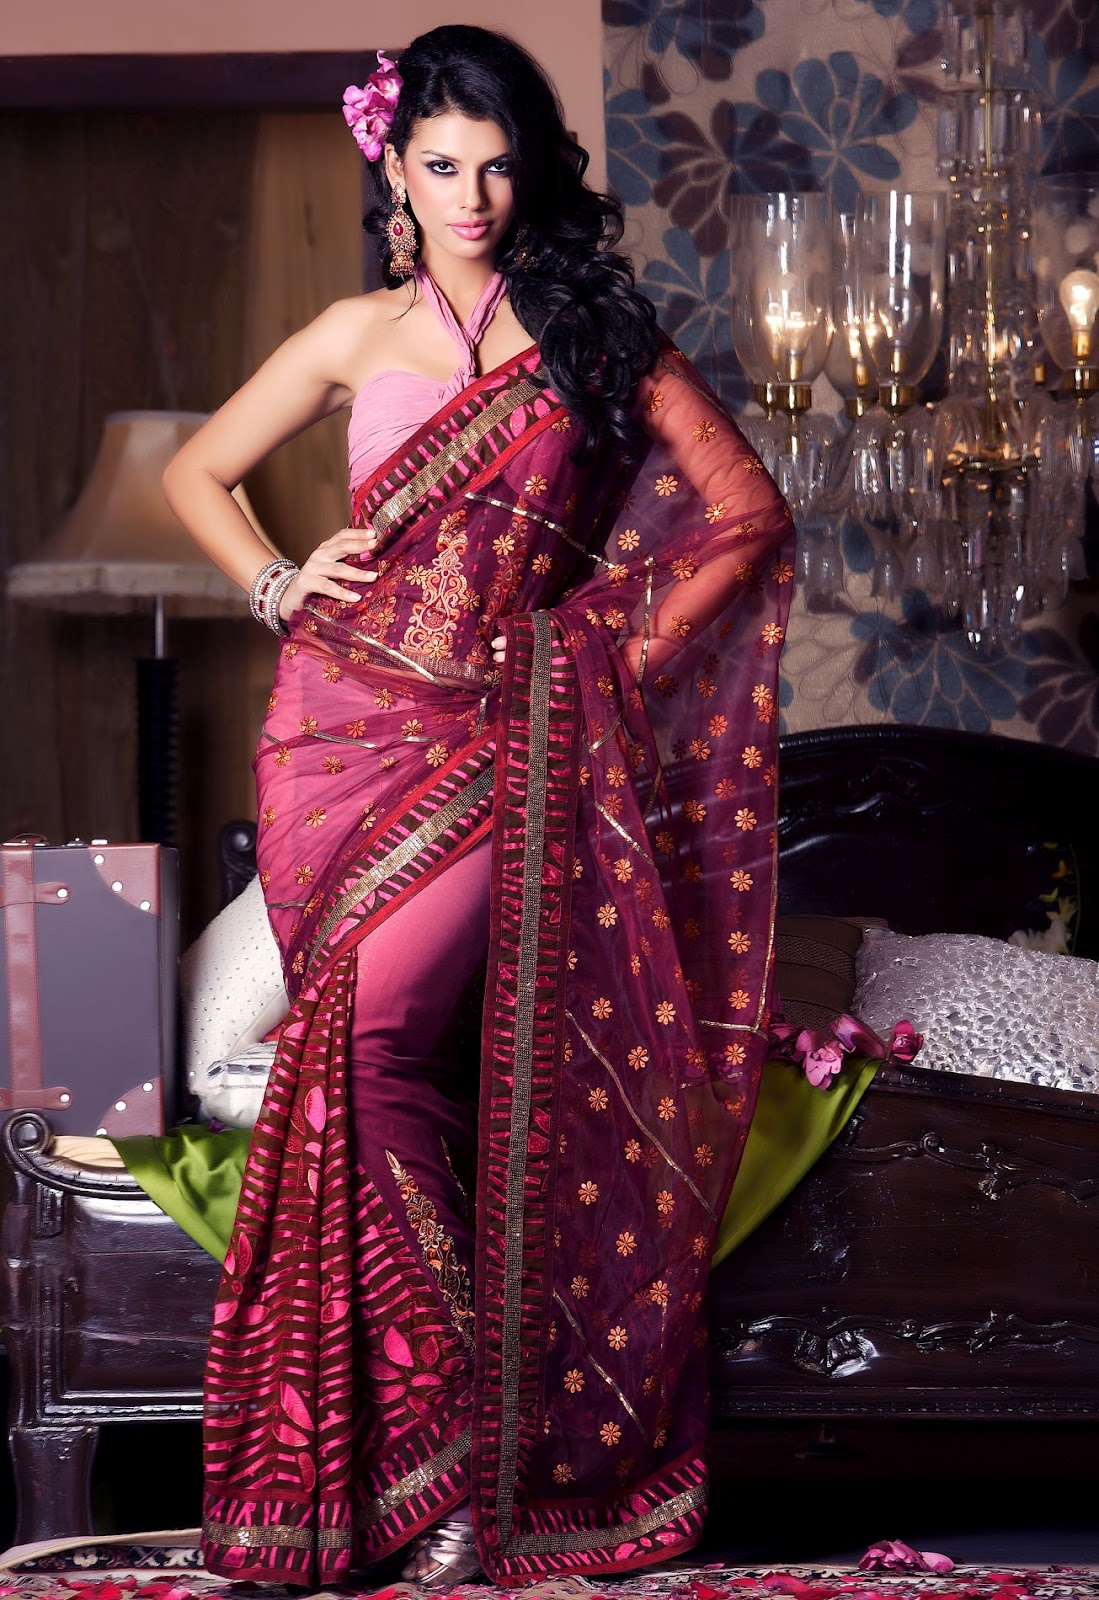 ASIAN GIRLS: Stunning Indian Model in Saree